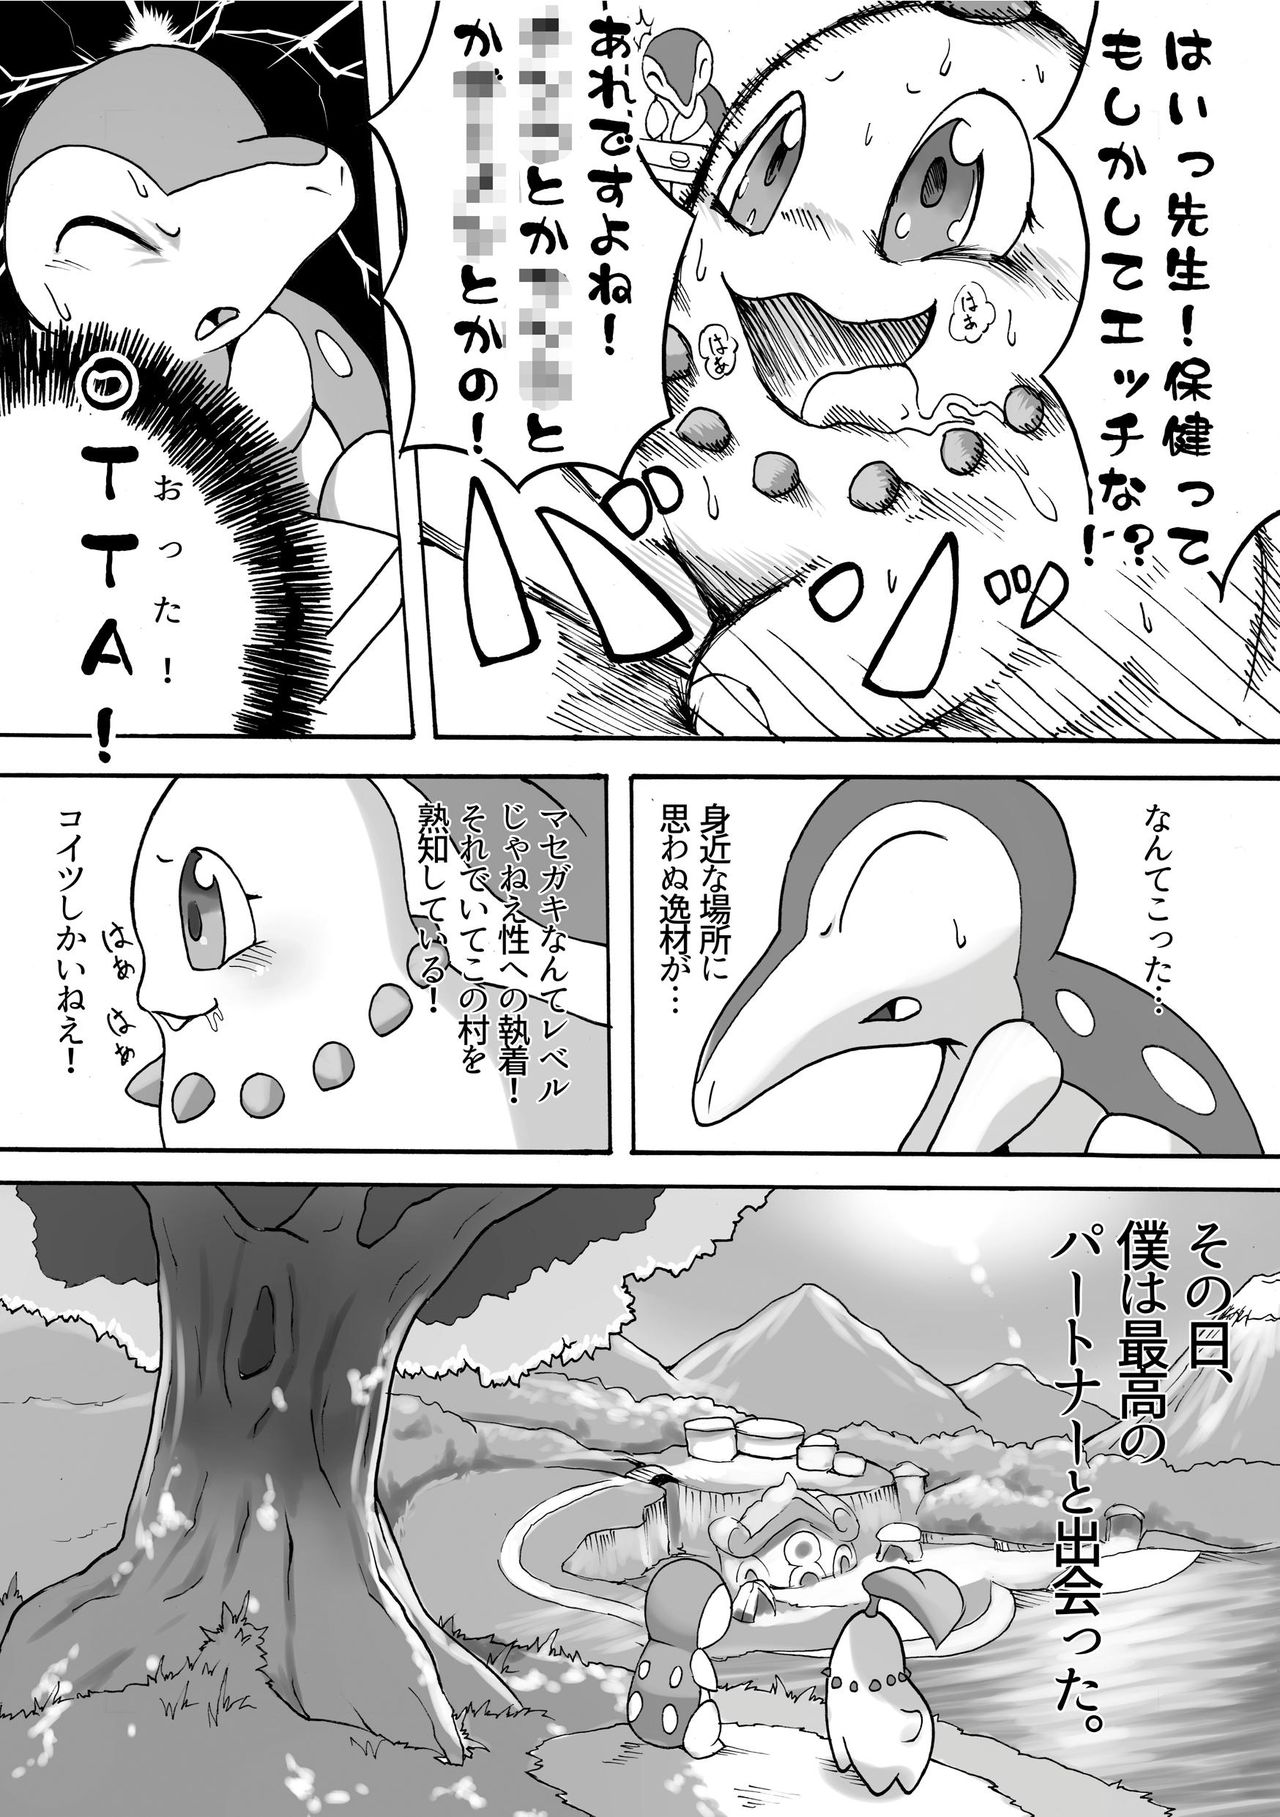 [Tamanokoshi (tamanosuke)] CONNECTED!!! (Pokémon Mystery Dungeon) [Digital] [たまのこし (tamanosuke)] CONNECTED!!! (ポケモン不思議のダンジョン) [DL版]